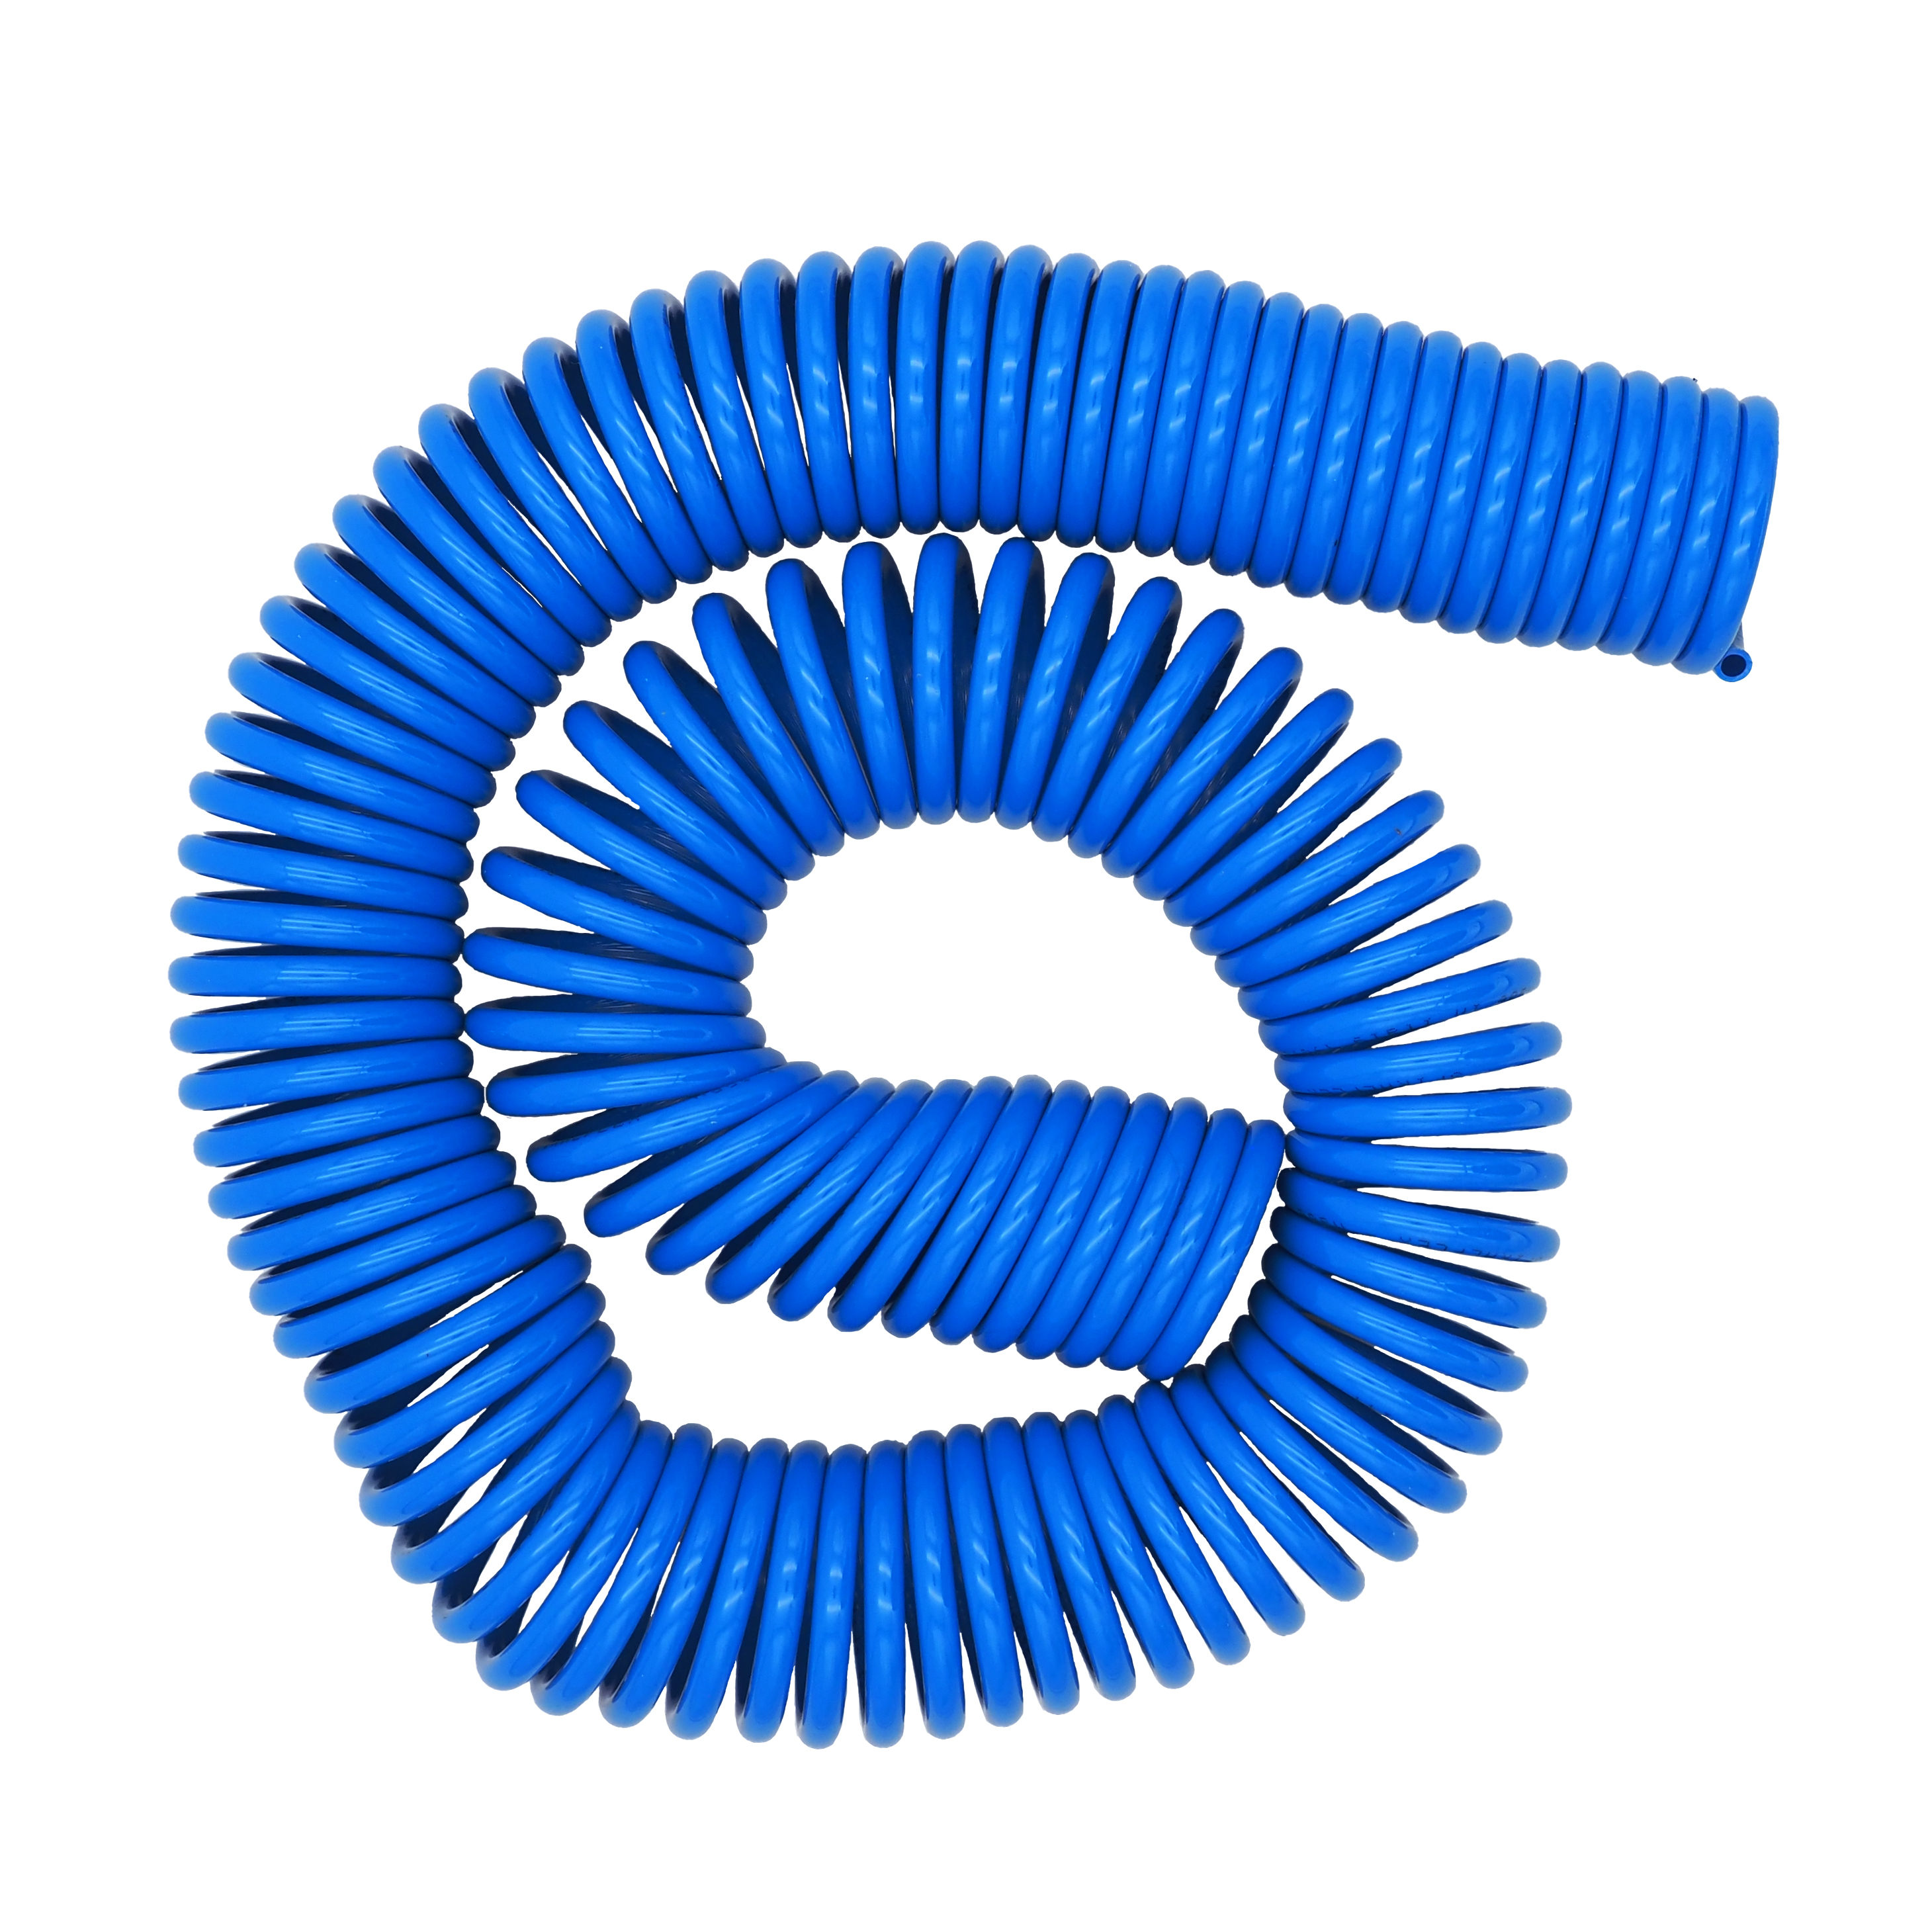 Spiral hose 5 x 8 mm
20 m work length